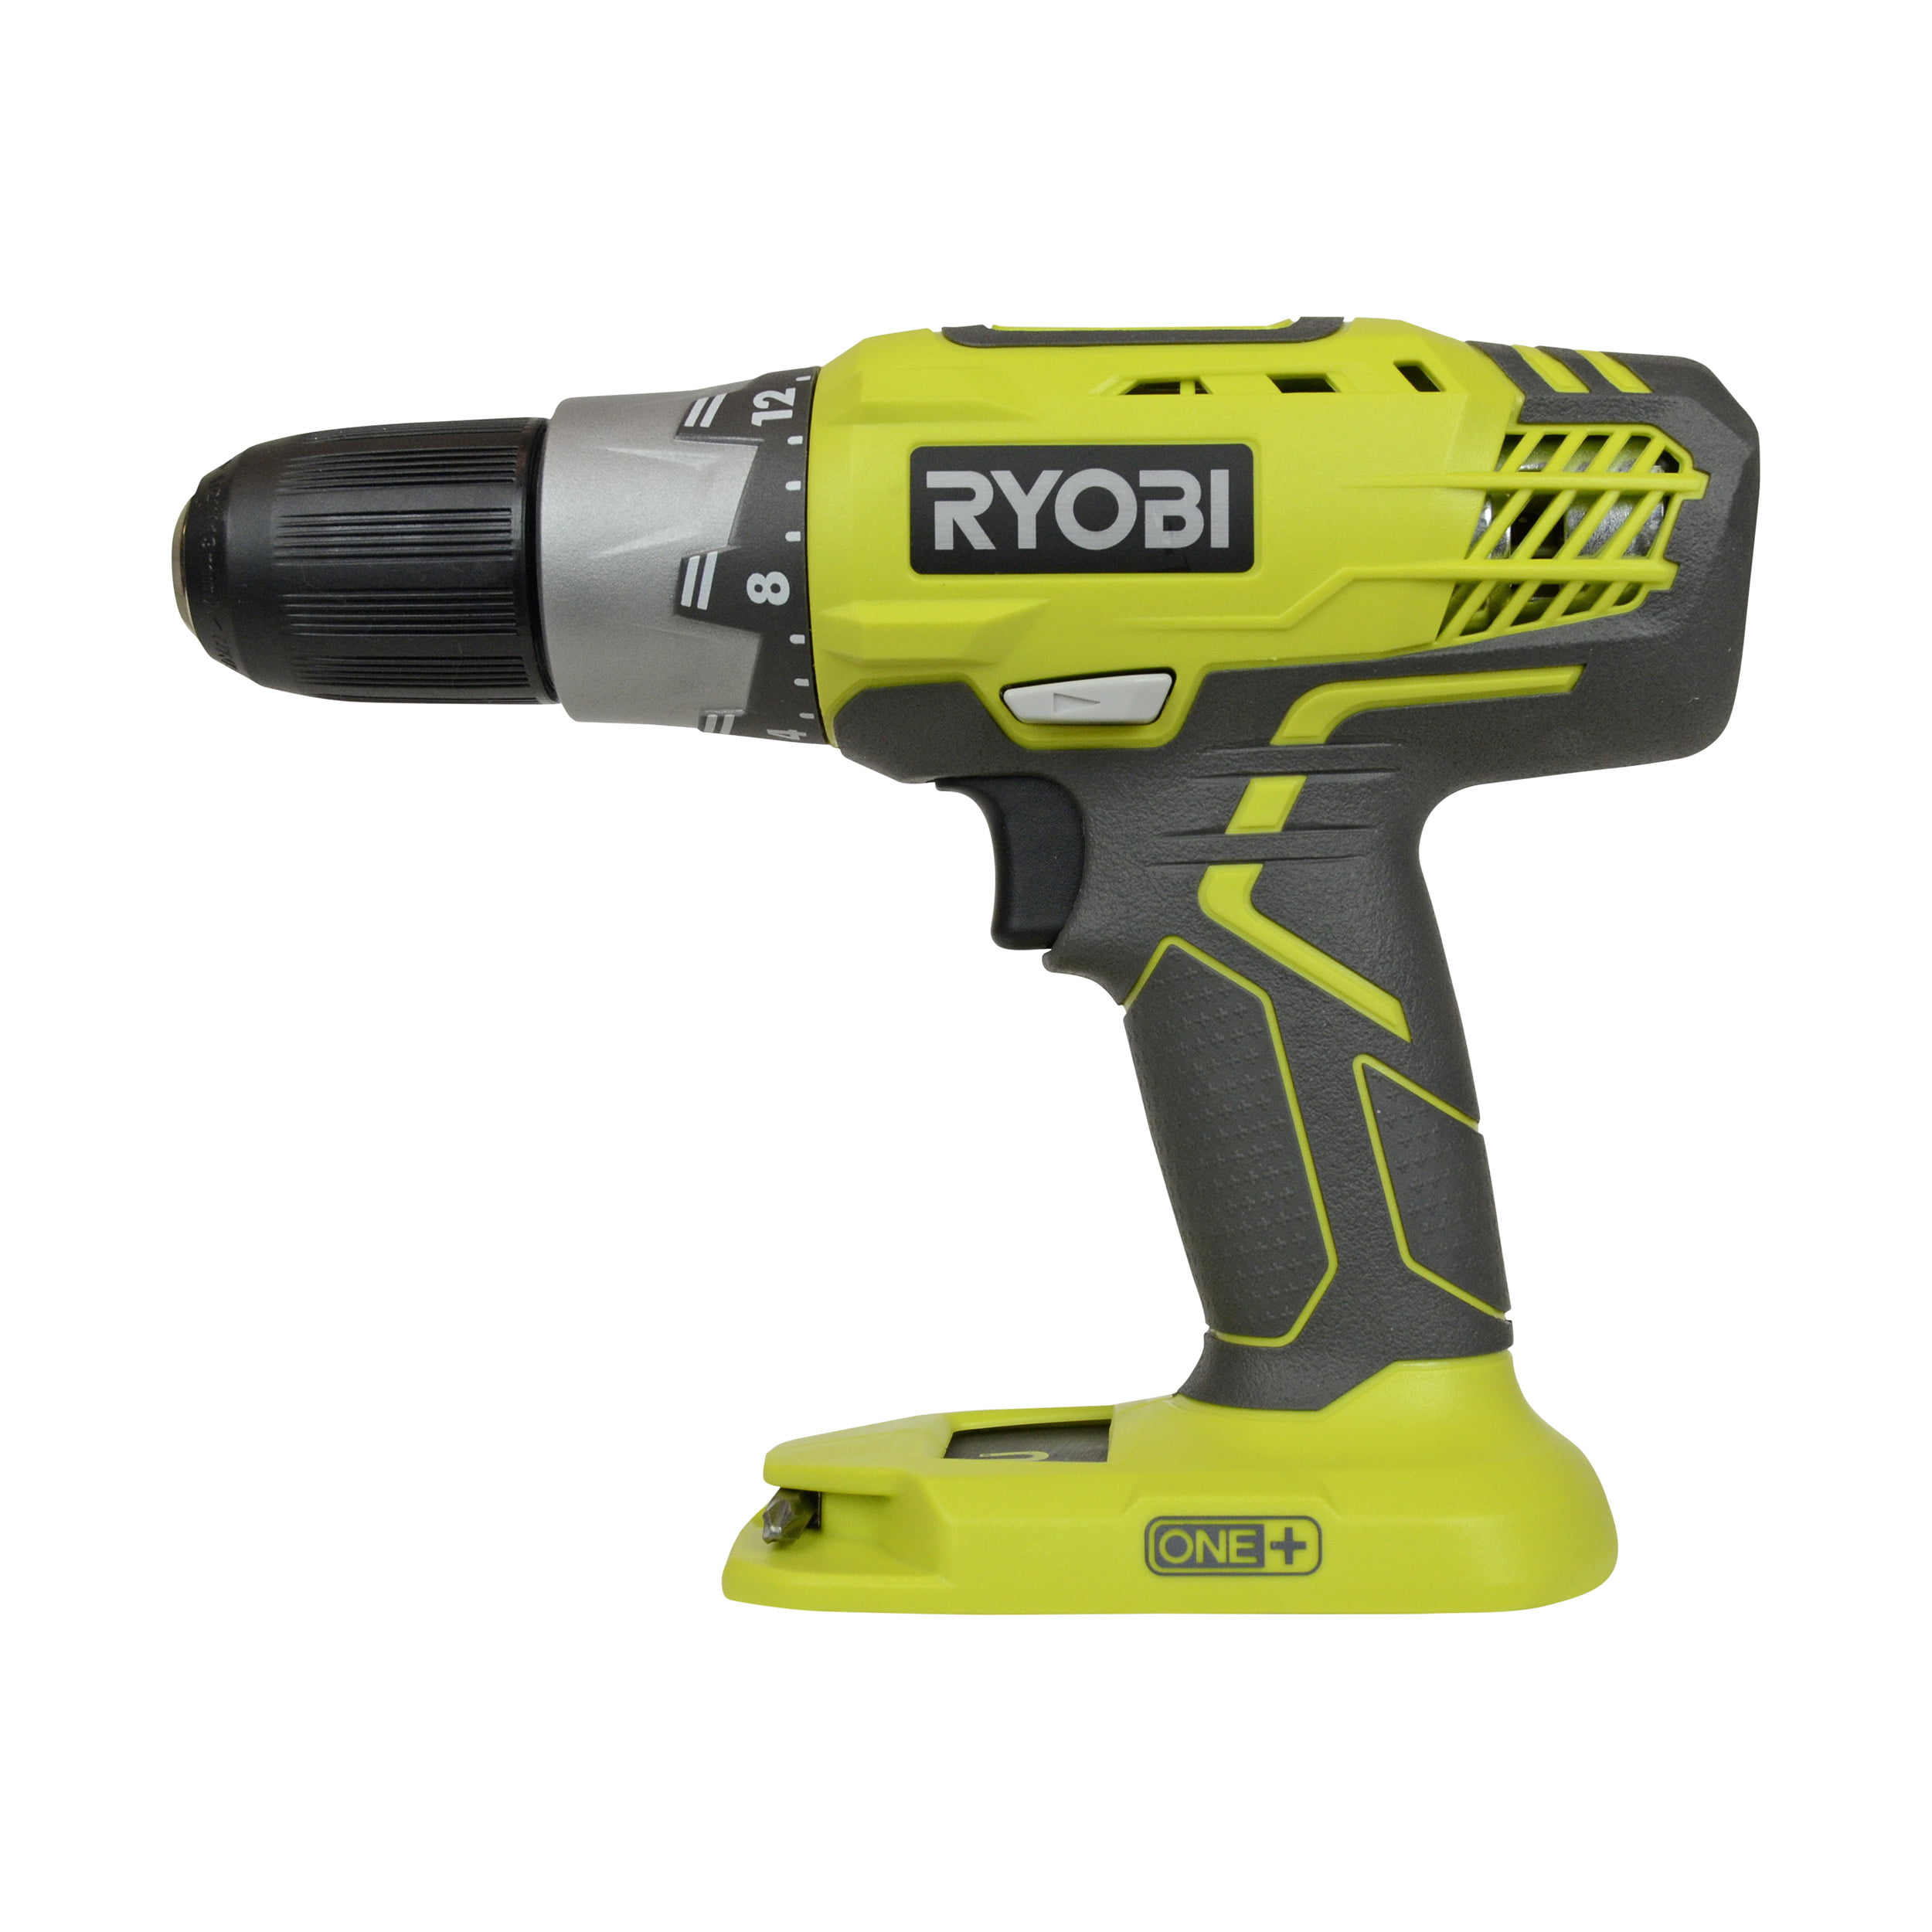 Ryobi Tools P277 One+ 1/2-in Lithium-Ion Cordless Drill Driver, Tool - Walmart.com